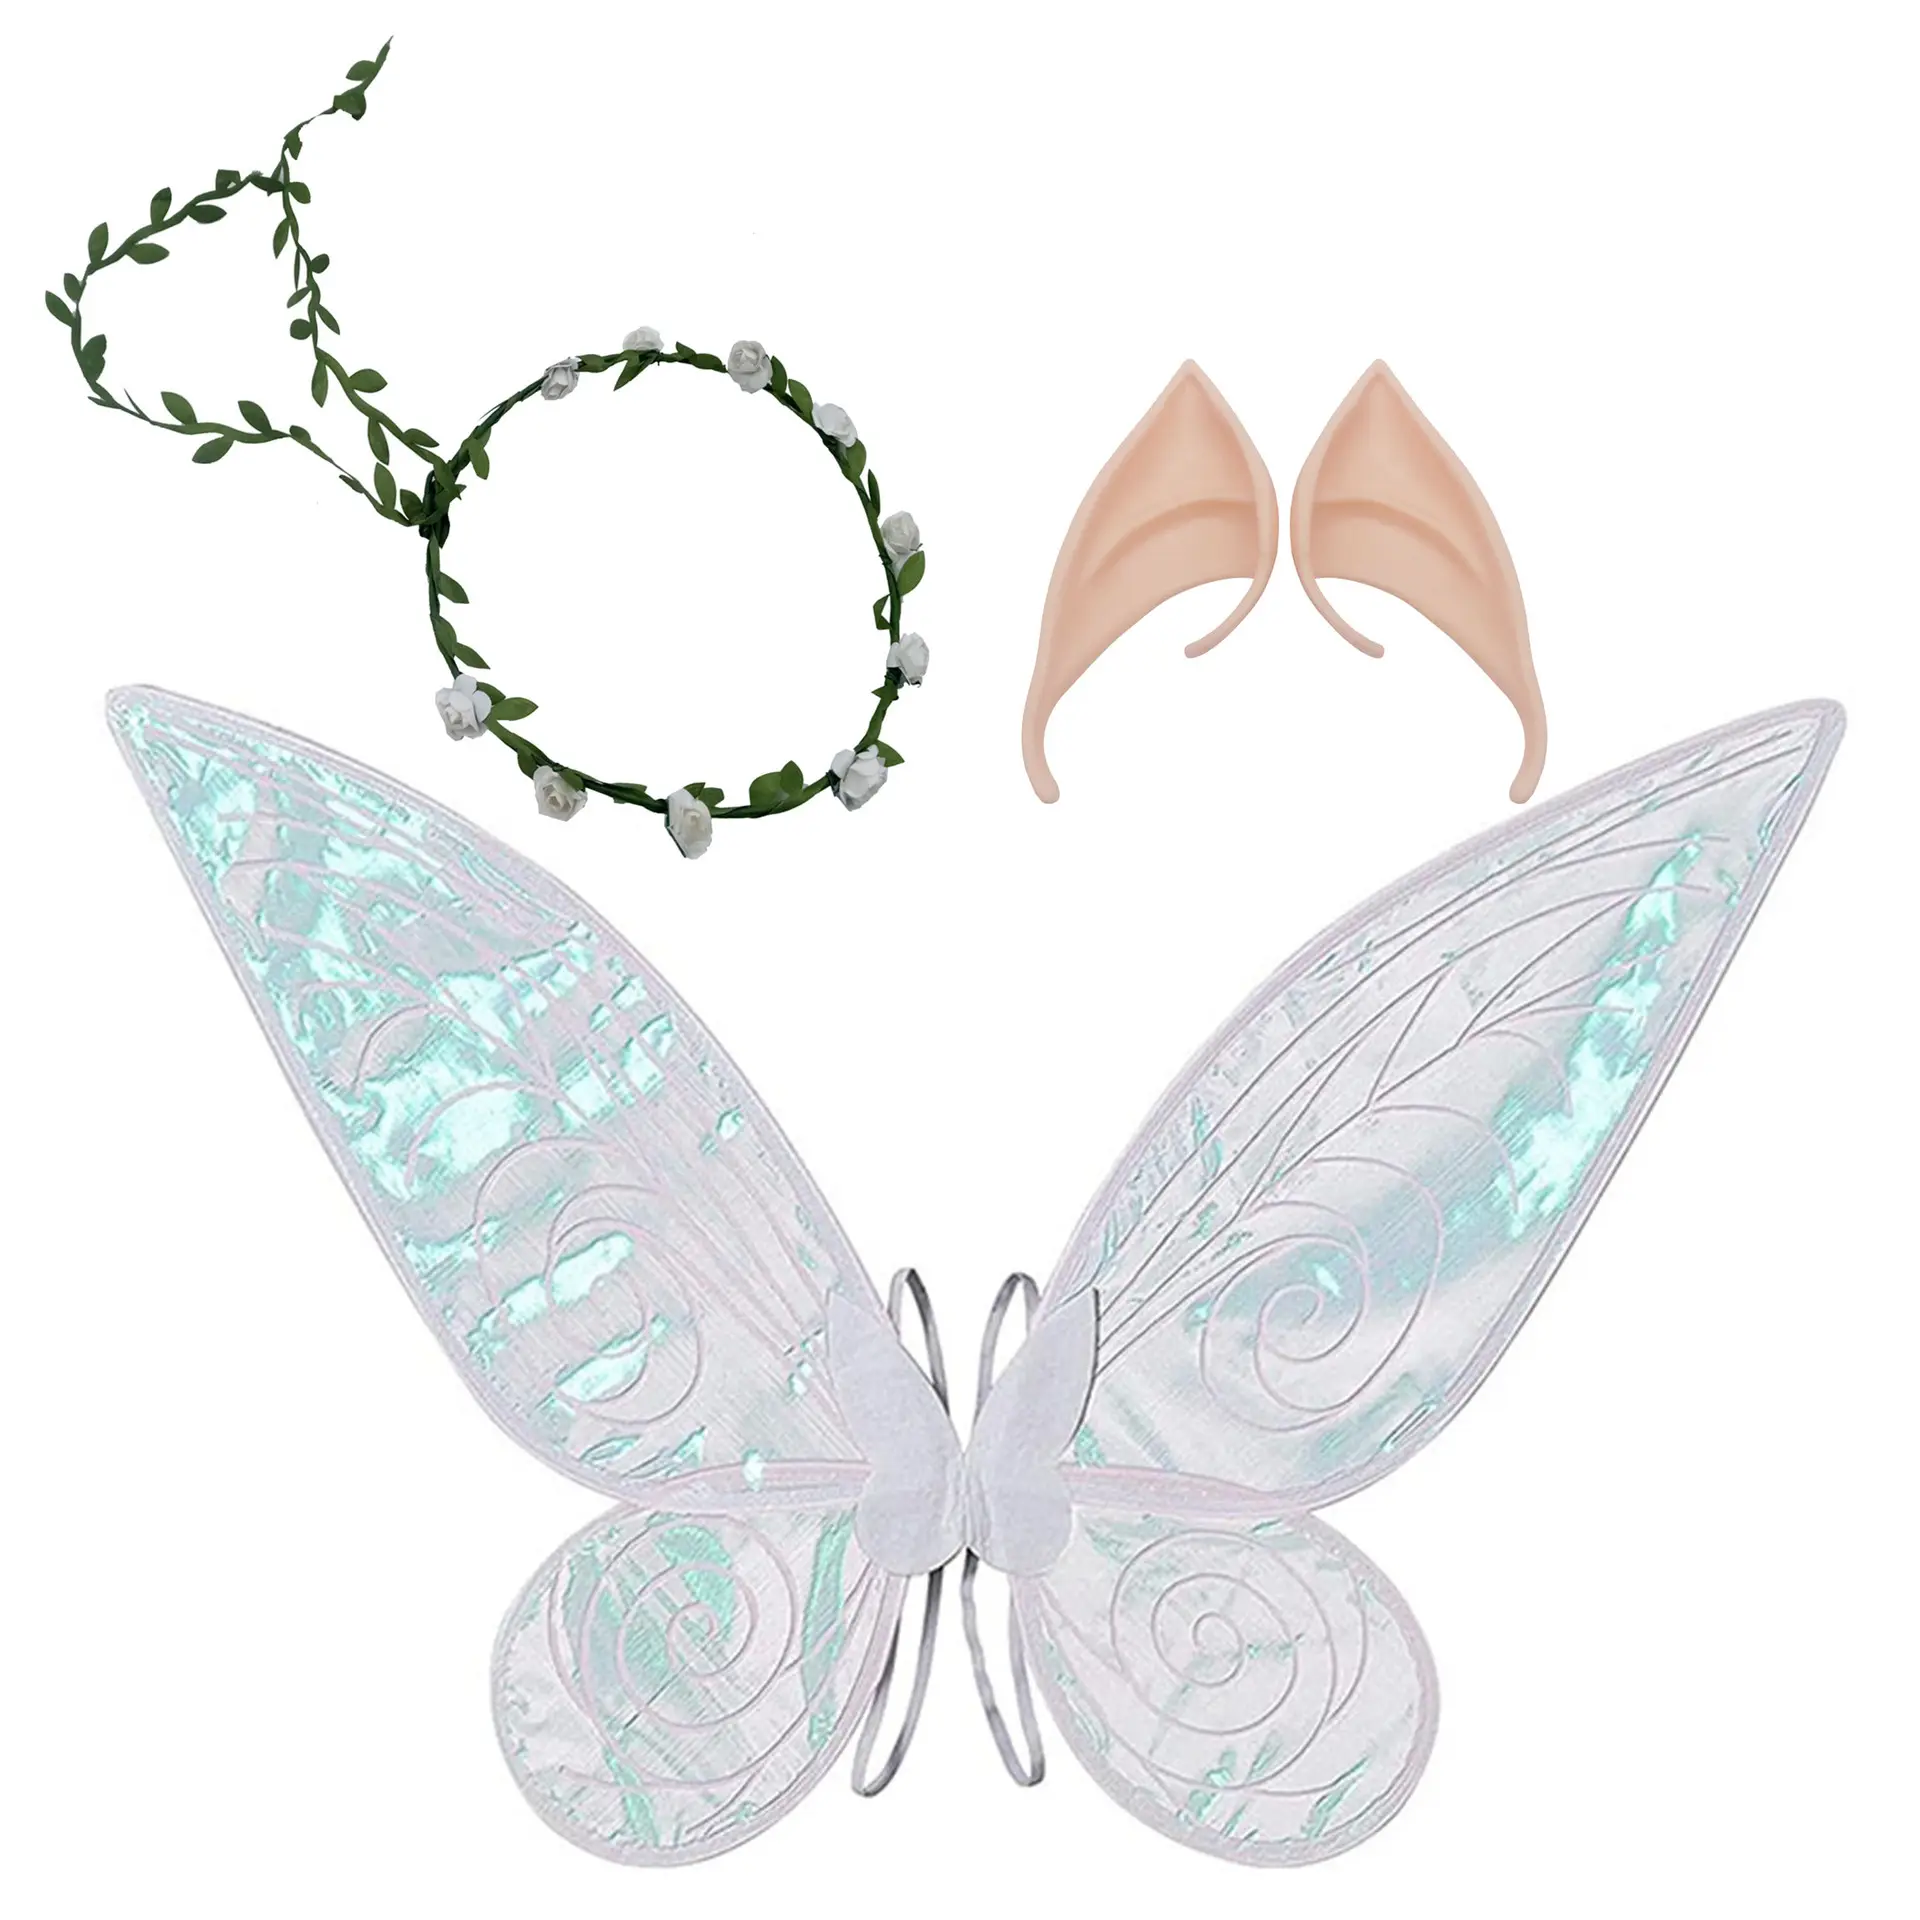 Borboleta Fairy Wings Traje para As Mulheres Menina Faísca Princesa Asa com Elf Orelhas para Halloween Dress Up Party Favor Y907